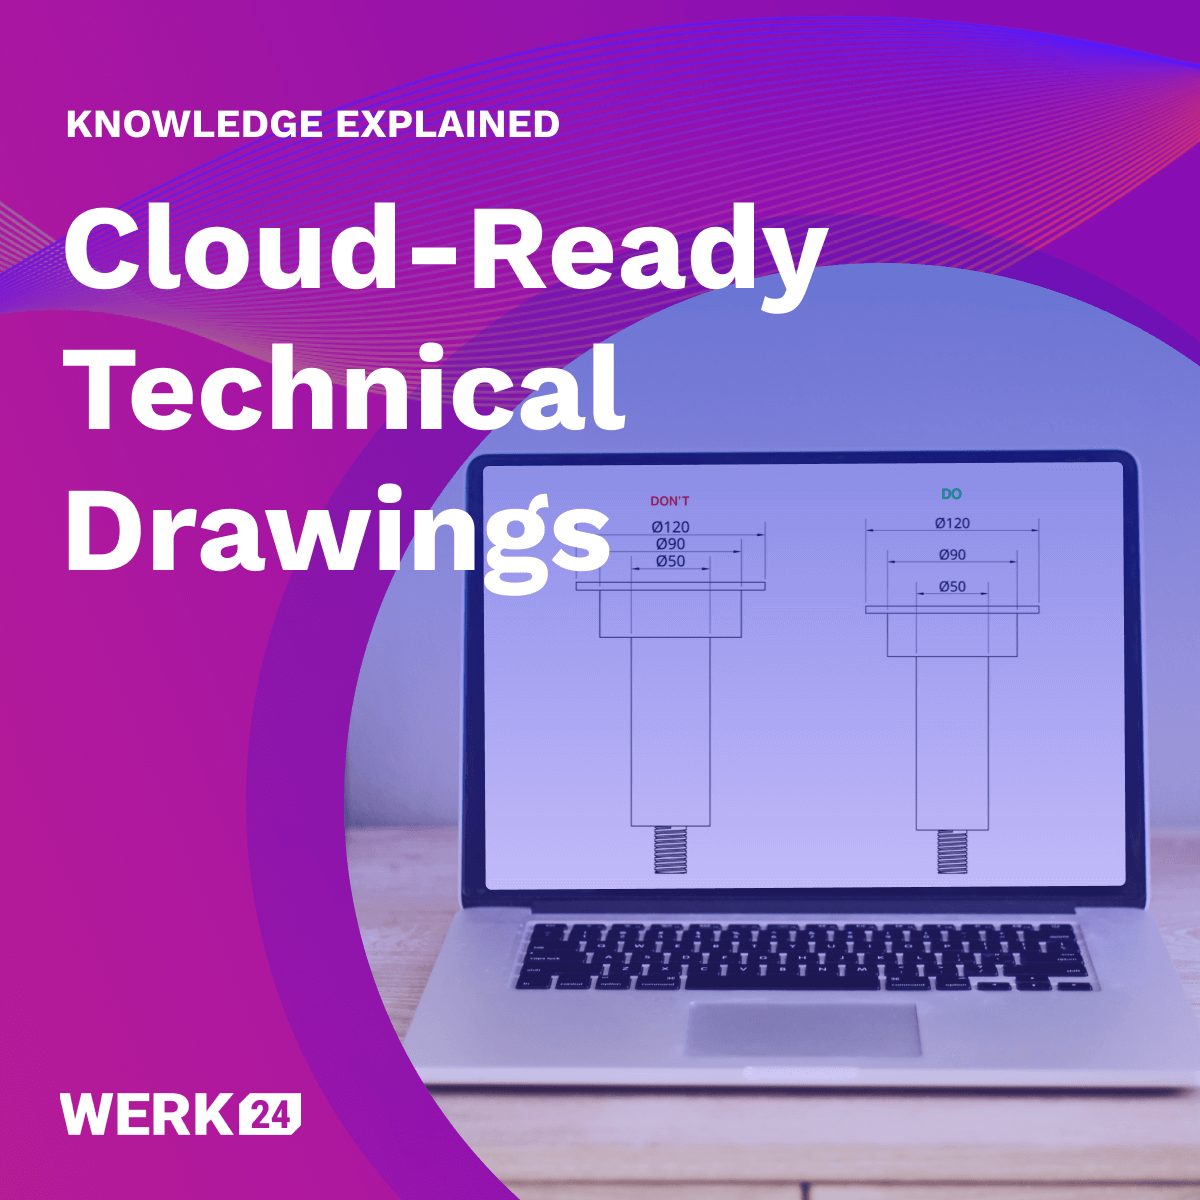 Creazione di disegni tecnici pronti per il cloud